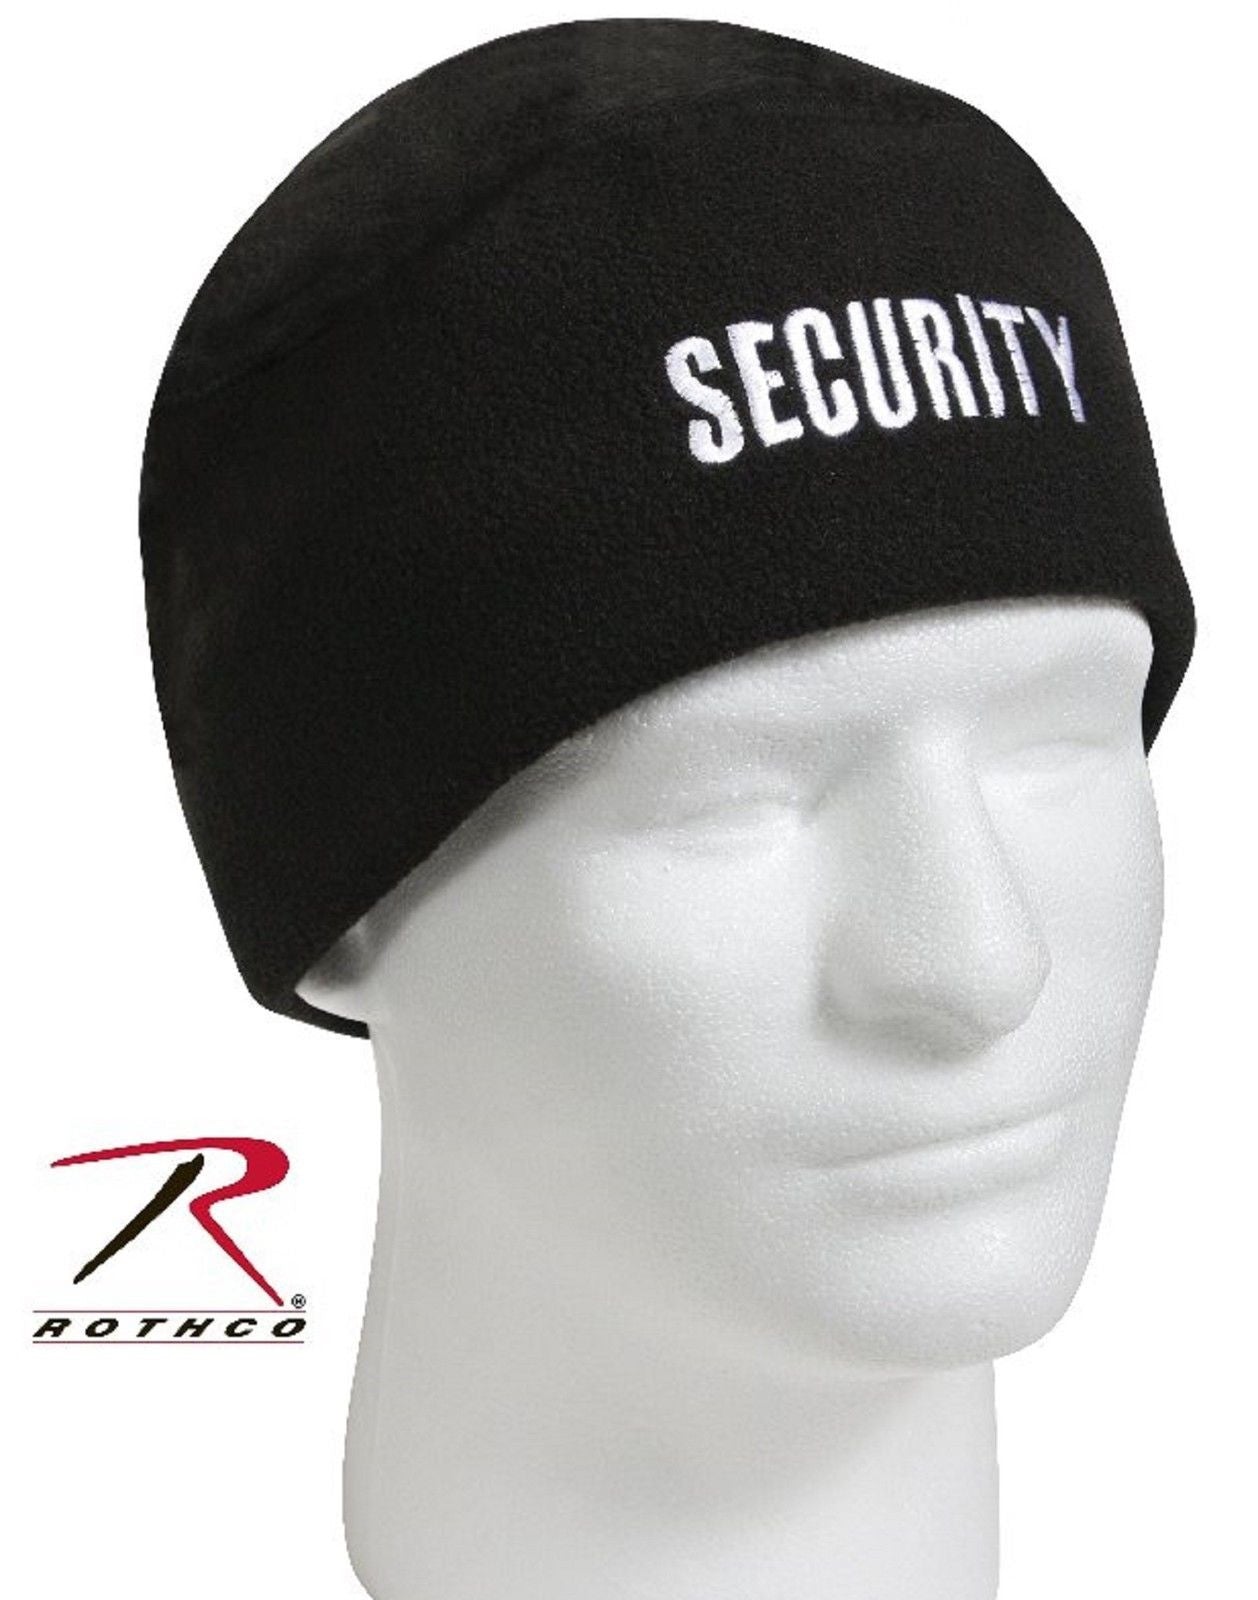 SECURITY Polar Fleece Winter Watch Cap - Black Embroidered SECURITY Ski Hat